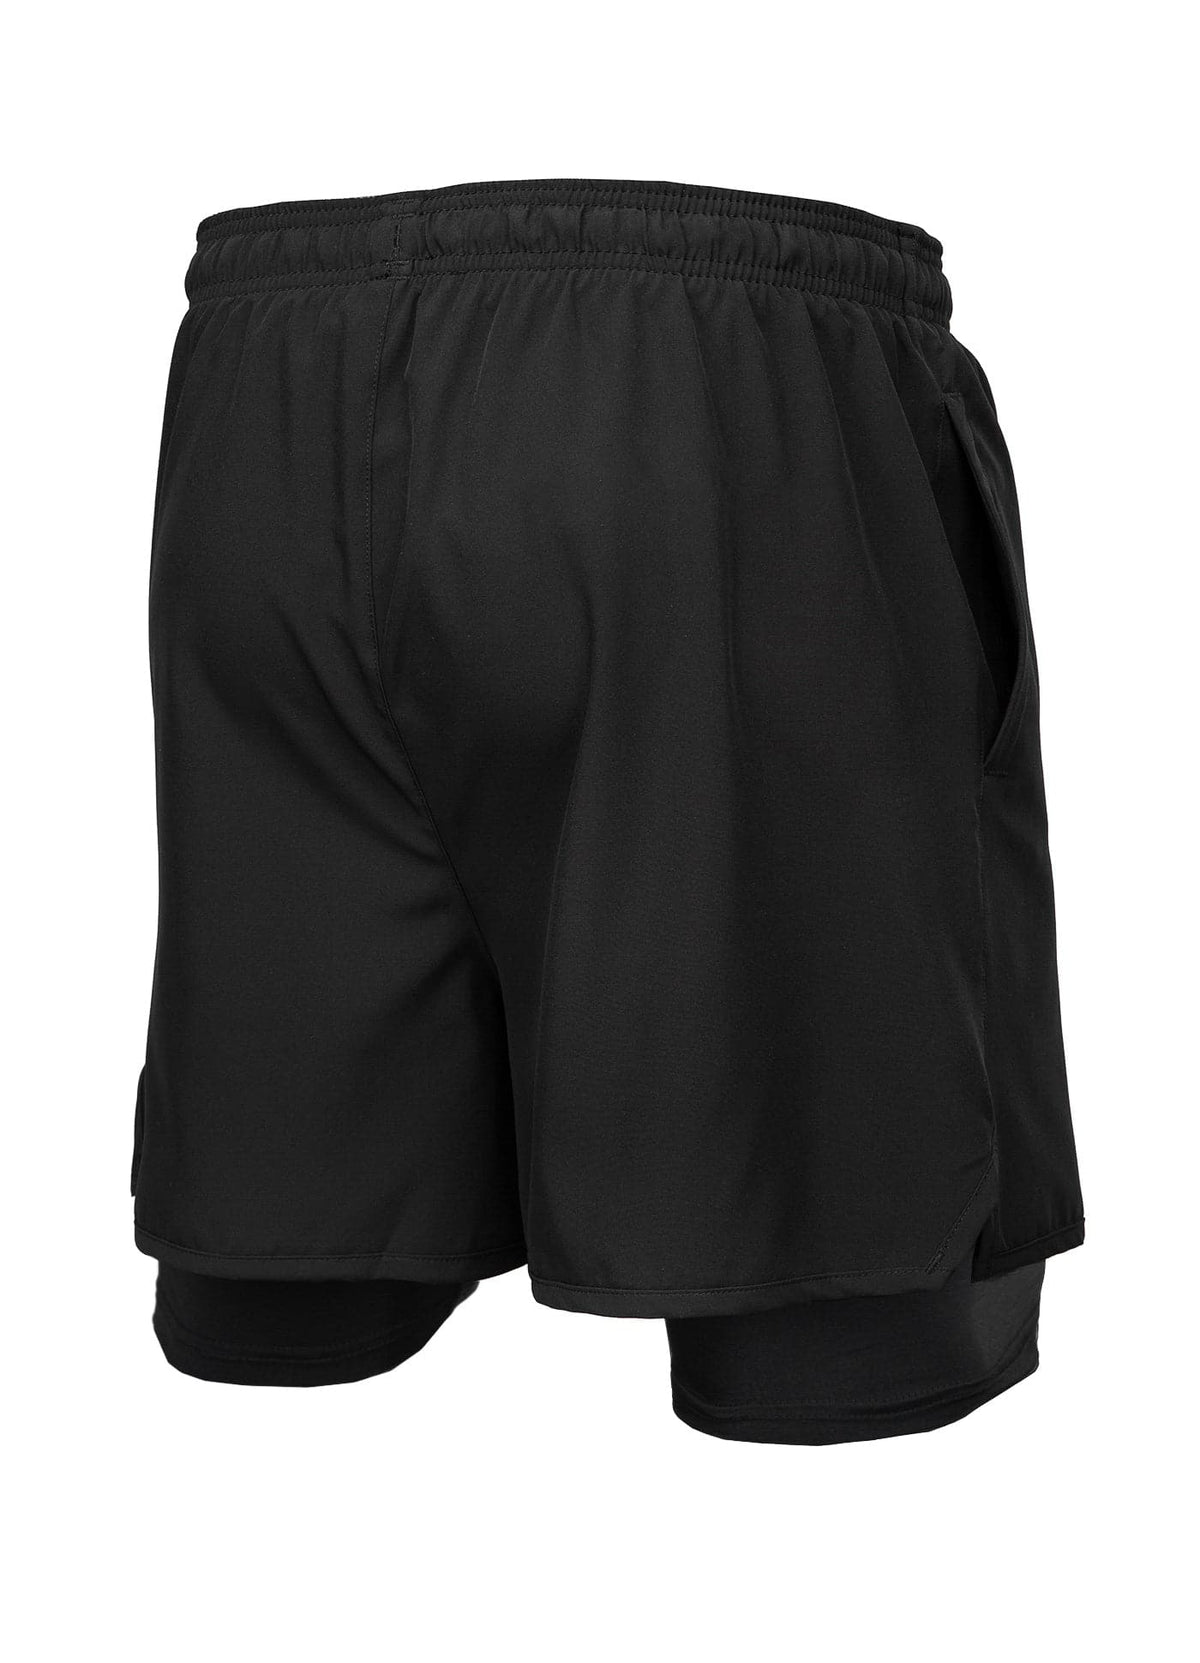 NEW LOGO Mesh Black Shorts - Pitbull West Coast International Store 